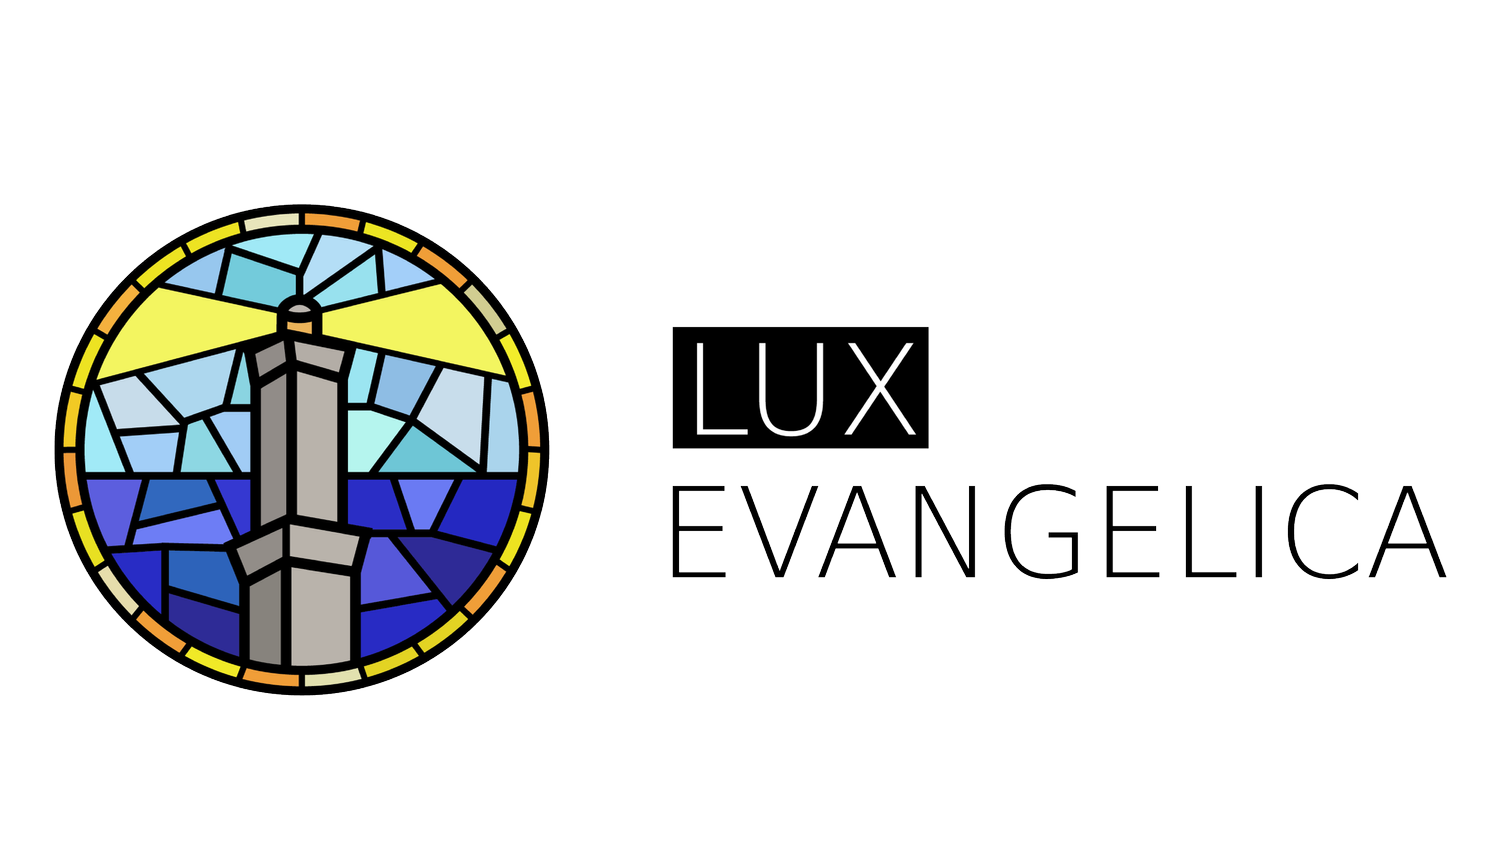 Lux evangelica